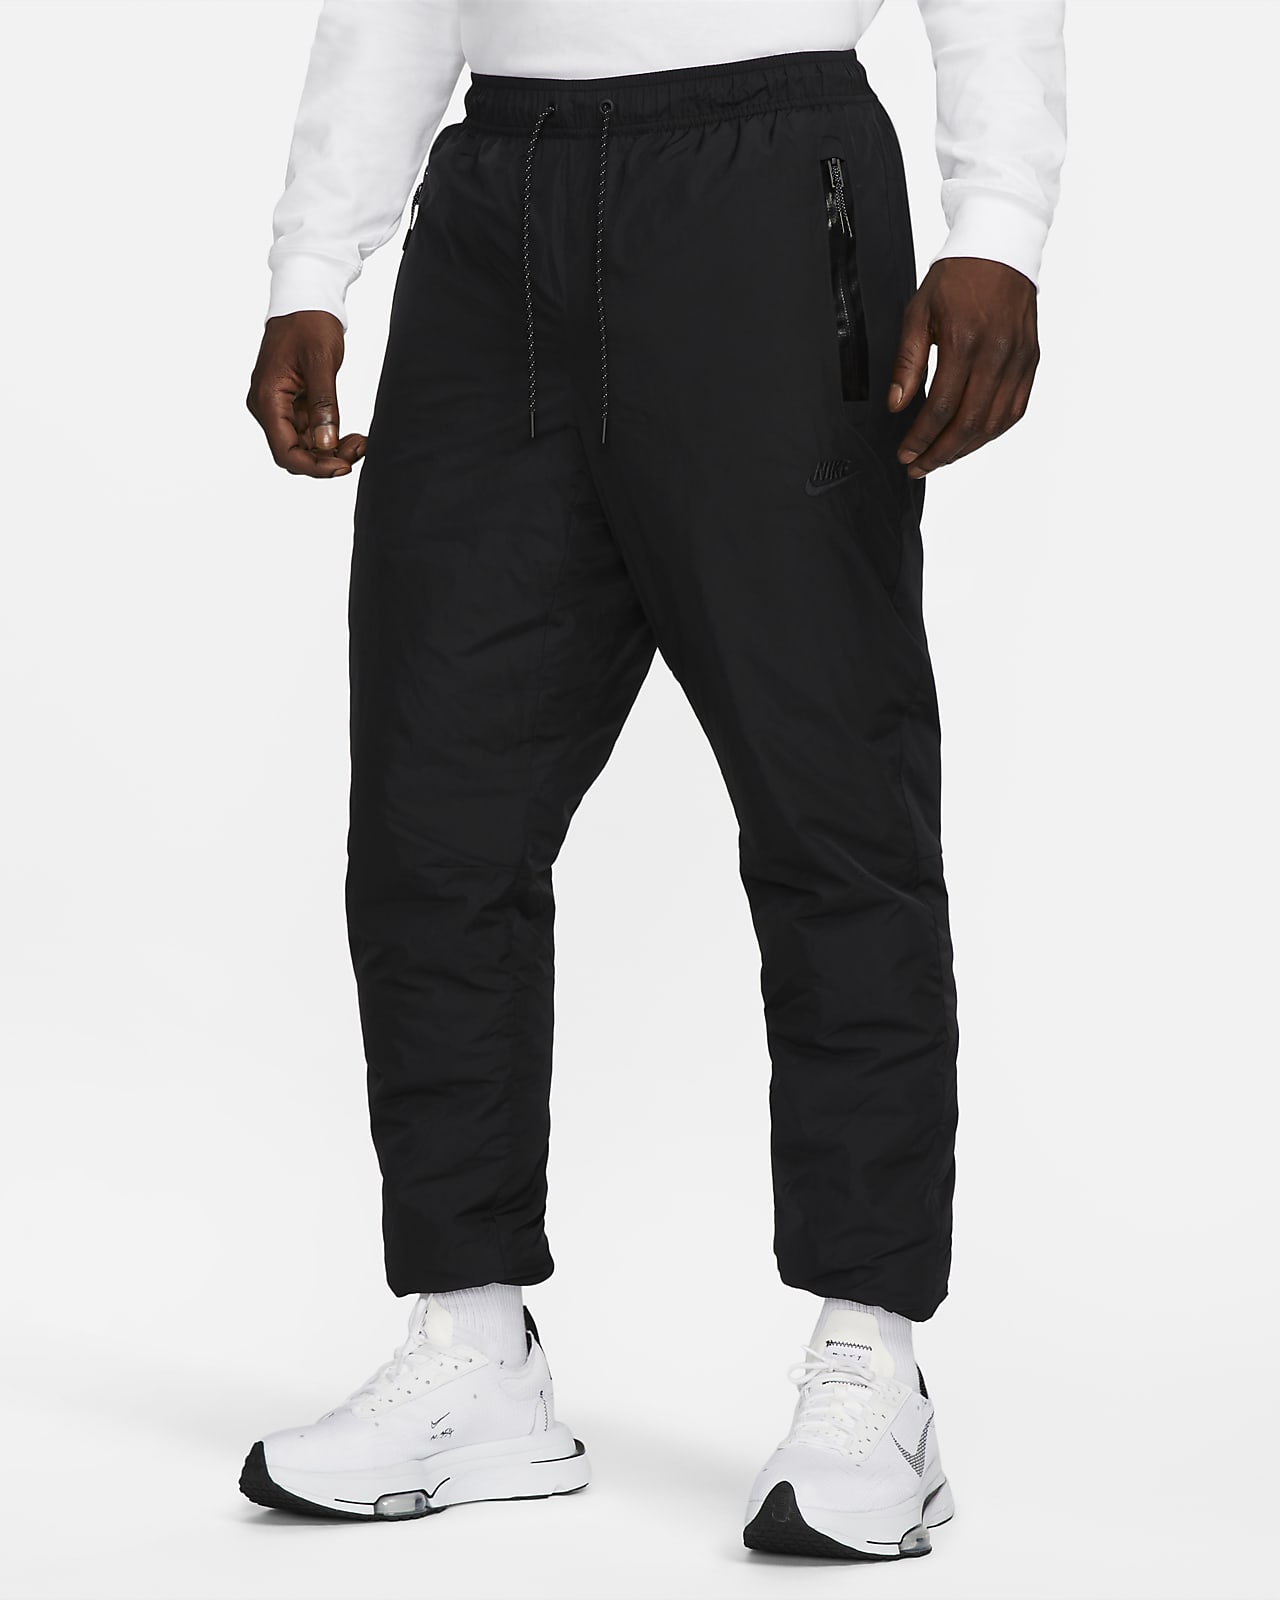 Nike Sportswear Therma-FIT Men's Filled Woven Trousers